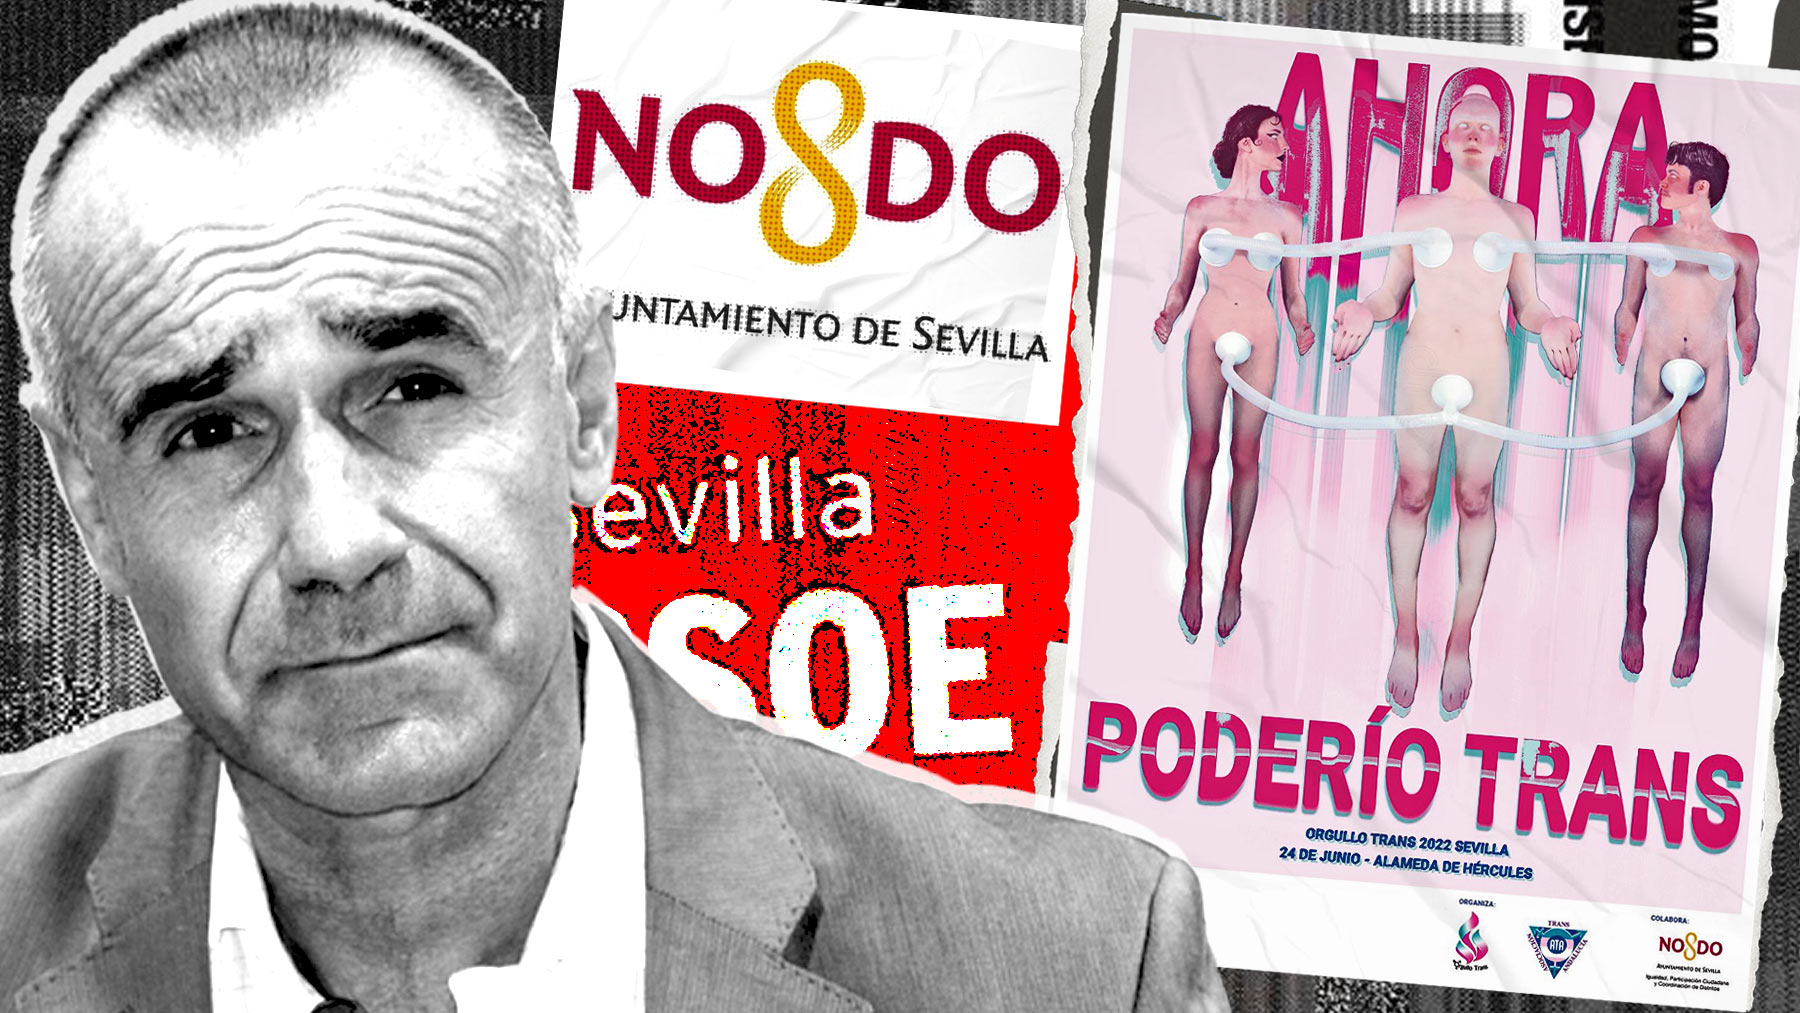 El alcalde socialista de Sevilla gasta 140.000 € en propaganda LGTBI con jornadas de ‘Poderío Trans’.